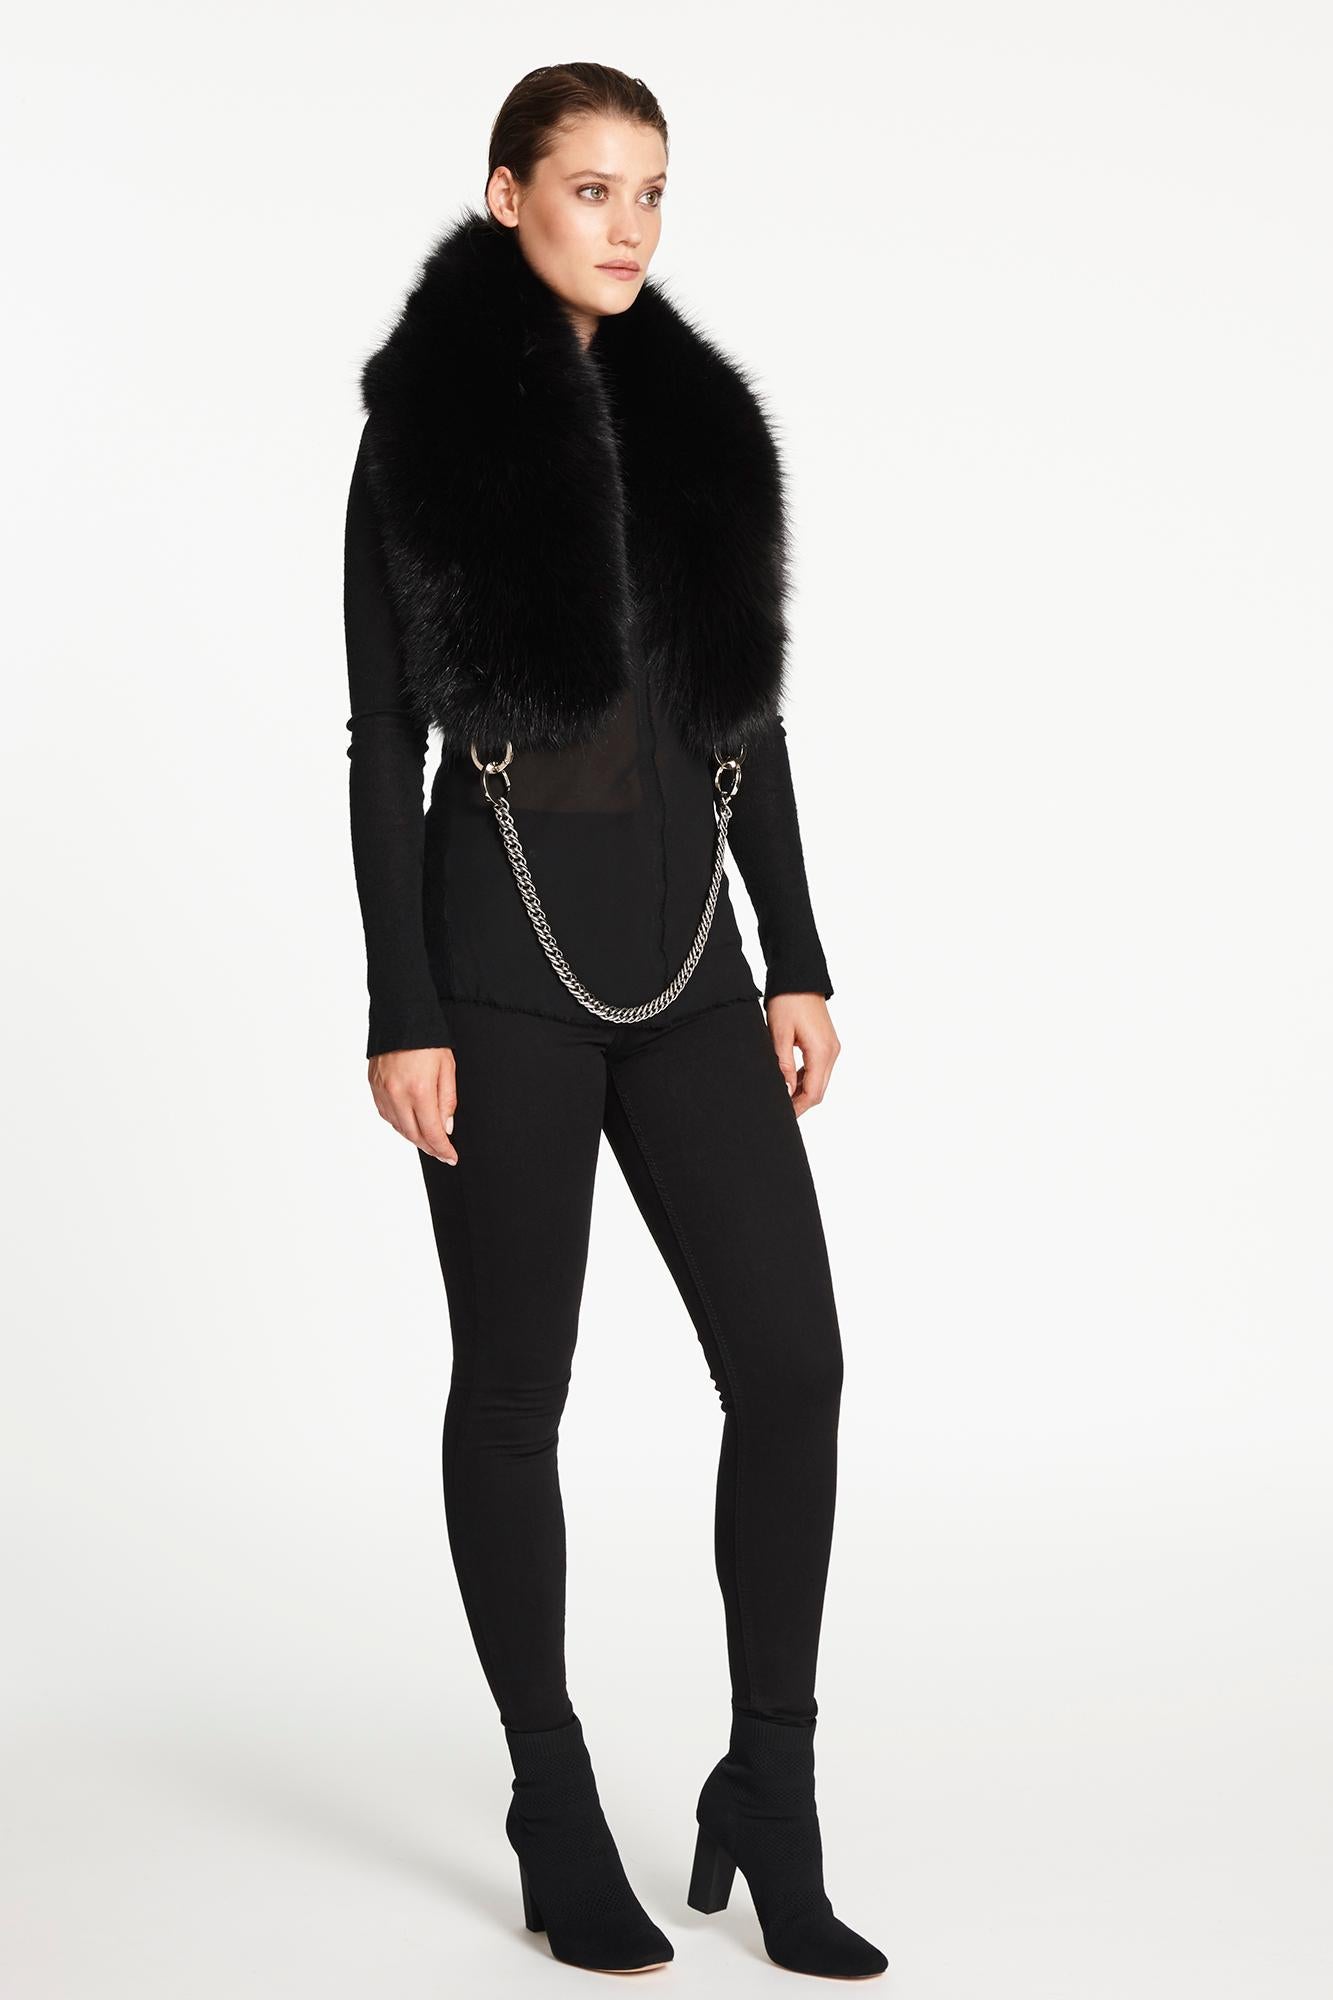 Verheyen London Chained Stole in Black Fox Fur & Chain - Brand New 2